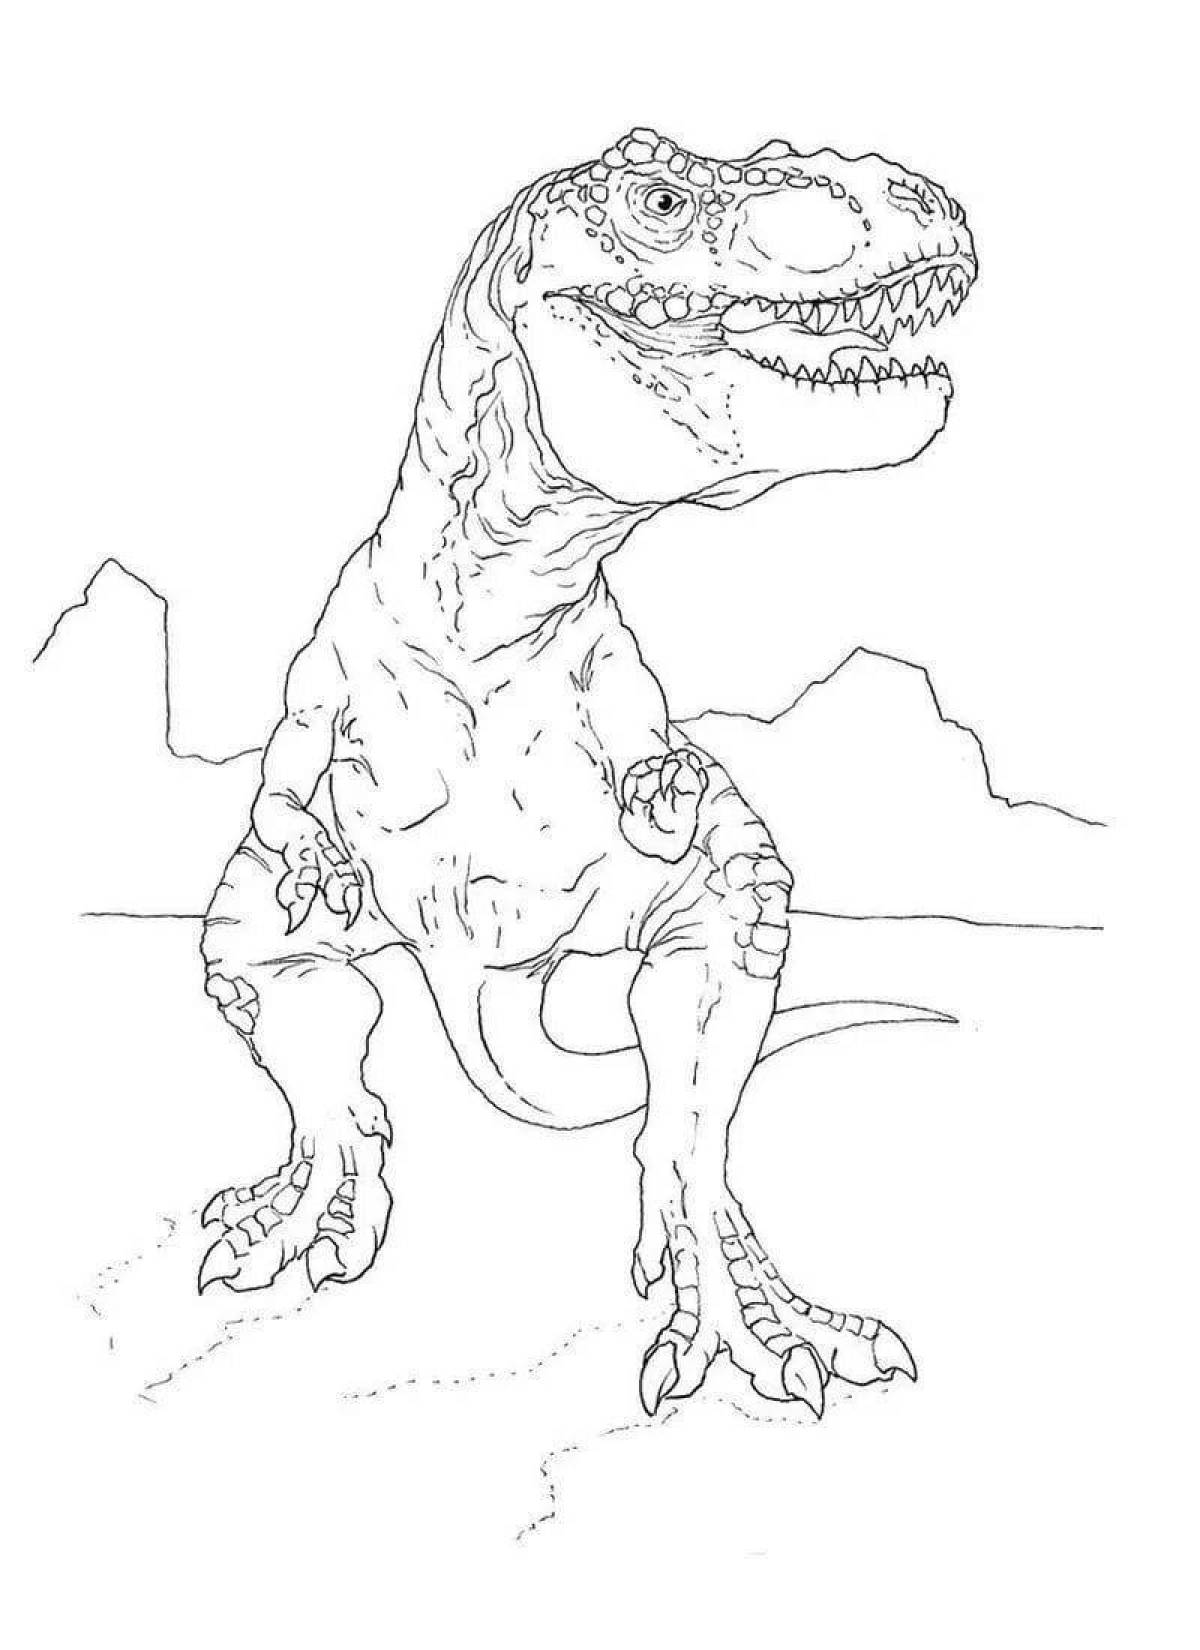 Tyrannosaurus rex majestic seal coloring page